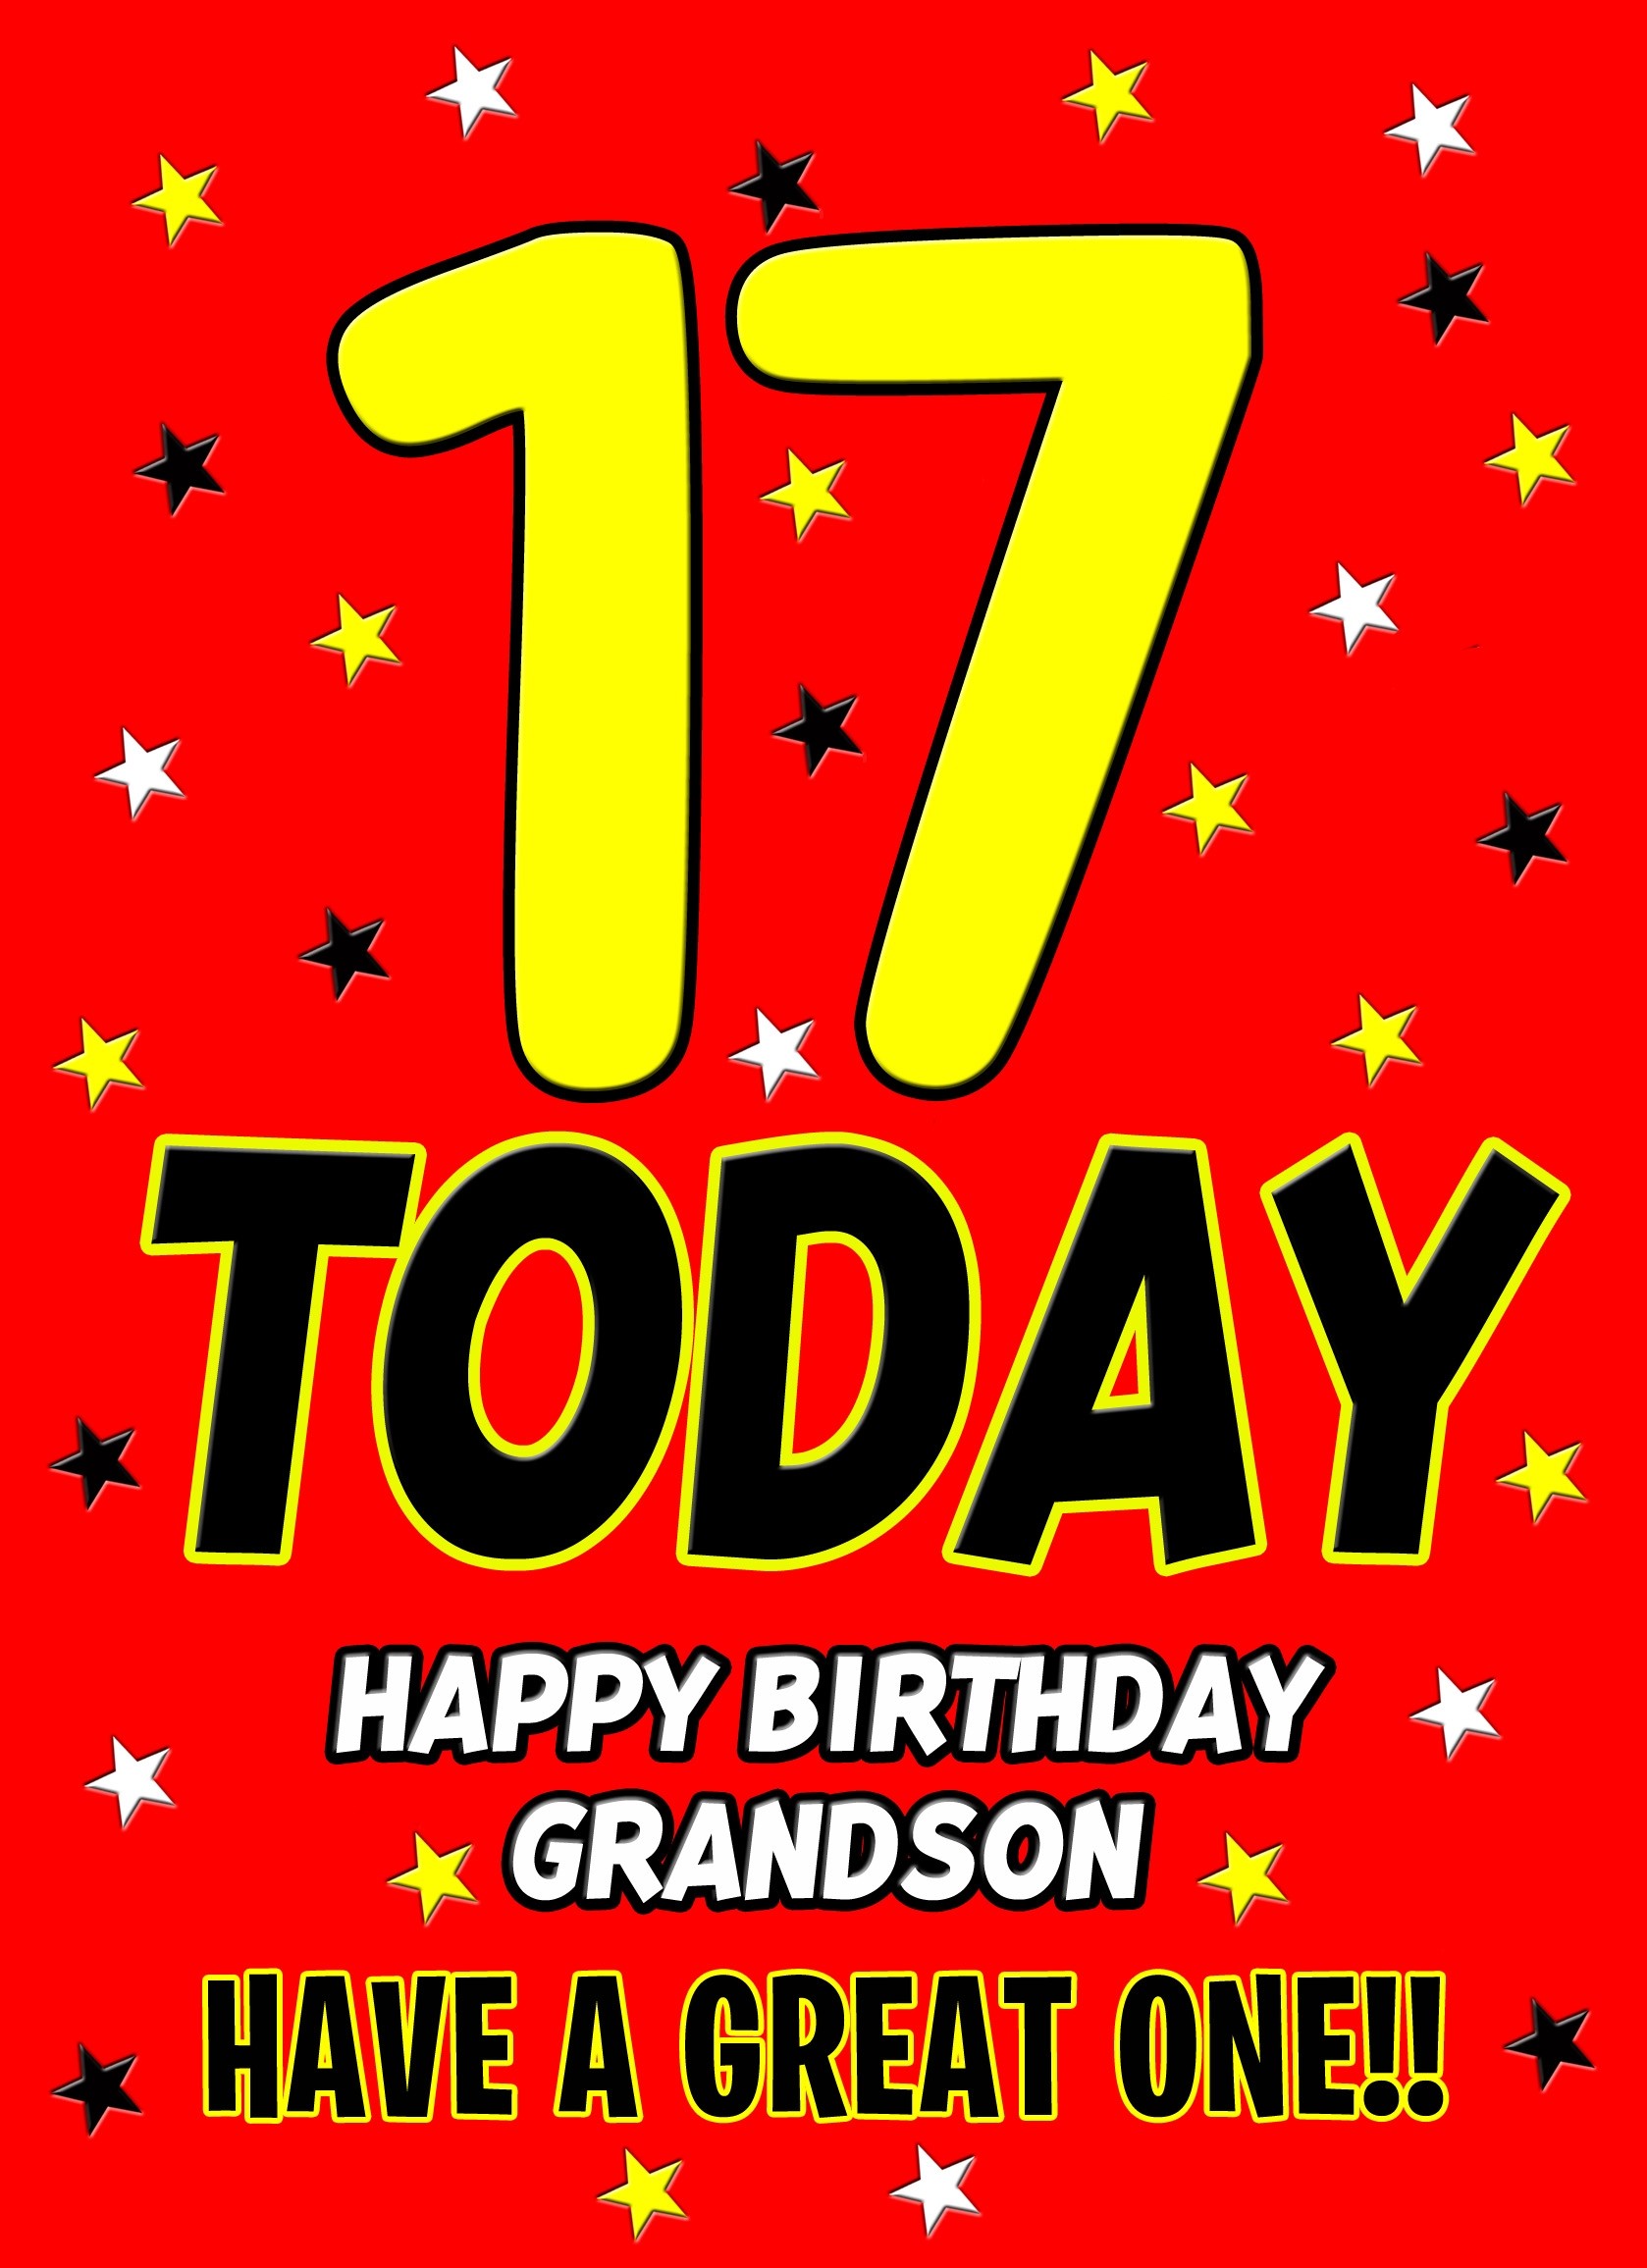 17 Today Birthday Card (Grandson)